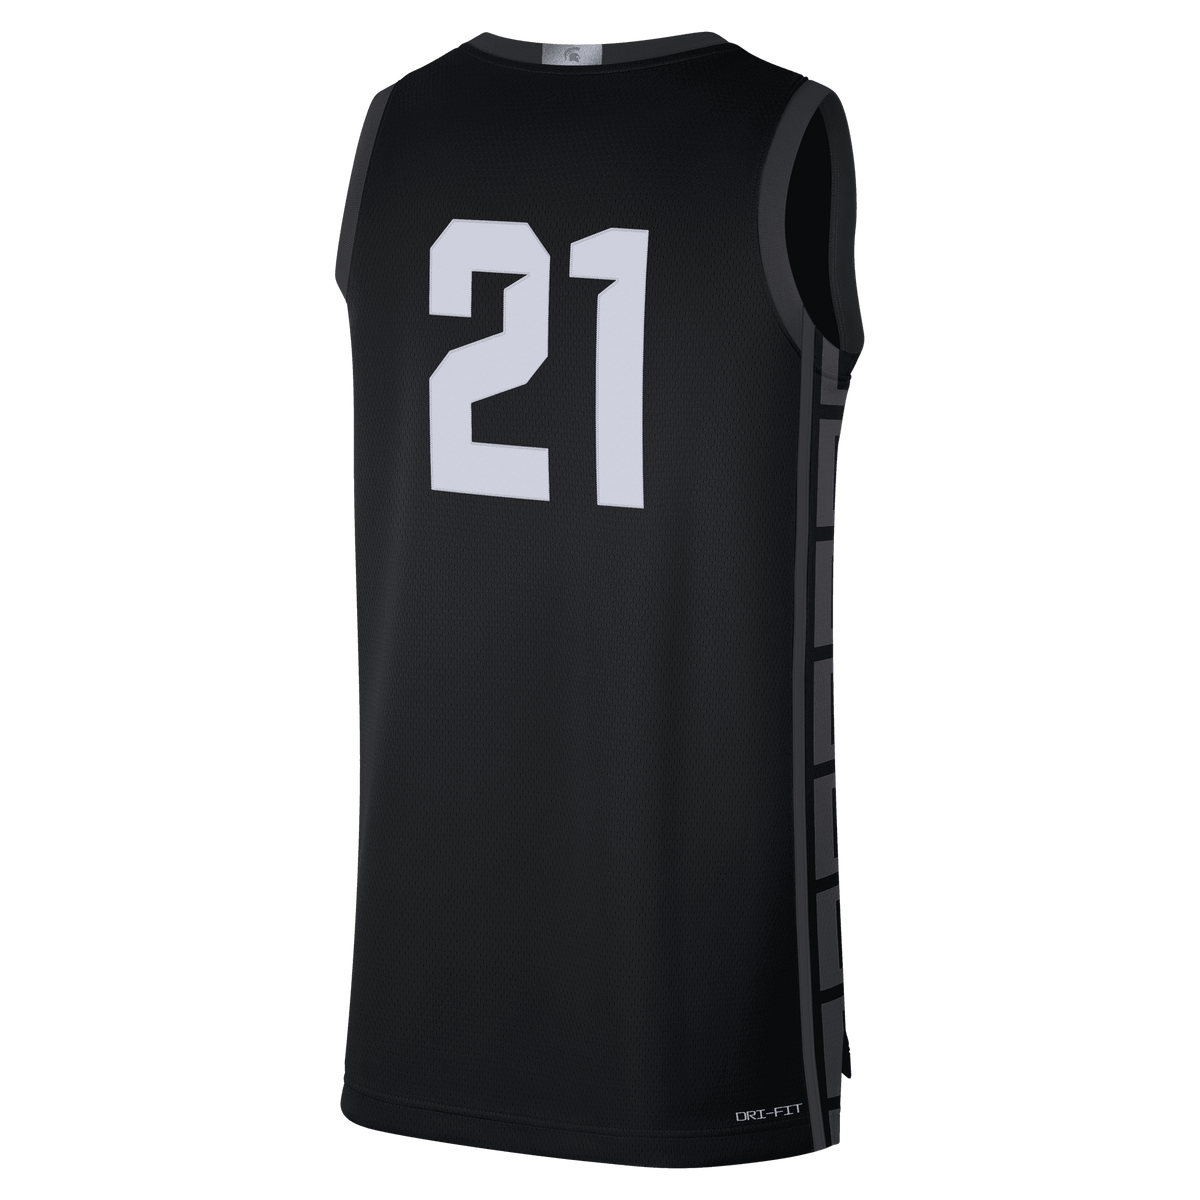 MSU Nike Dark Green Basketball Jersey Women's Size 2XL – MSU Surplus Store